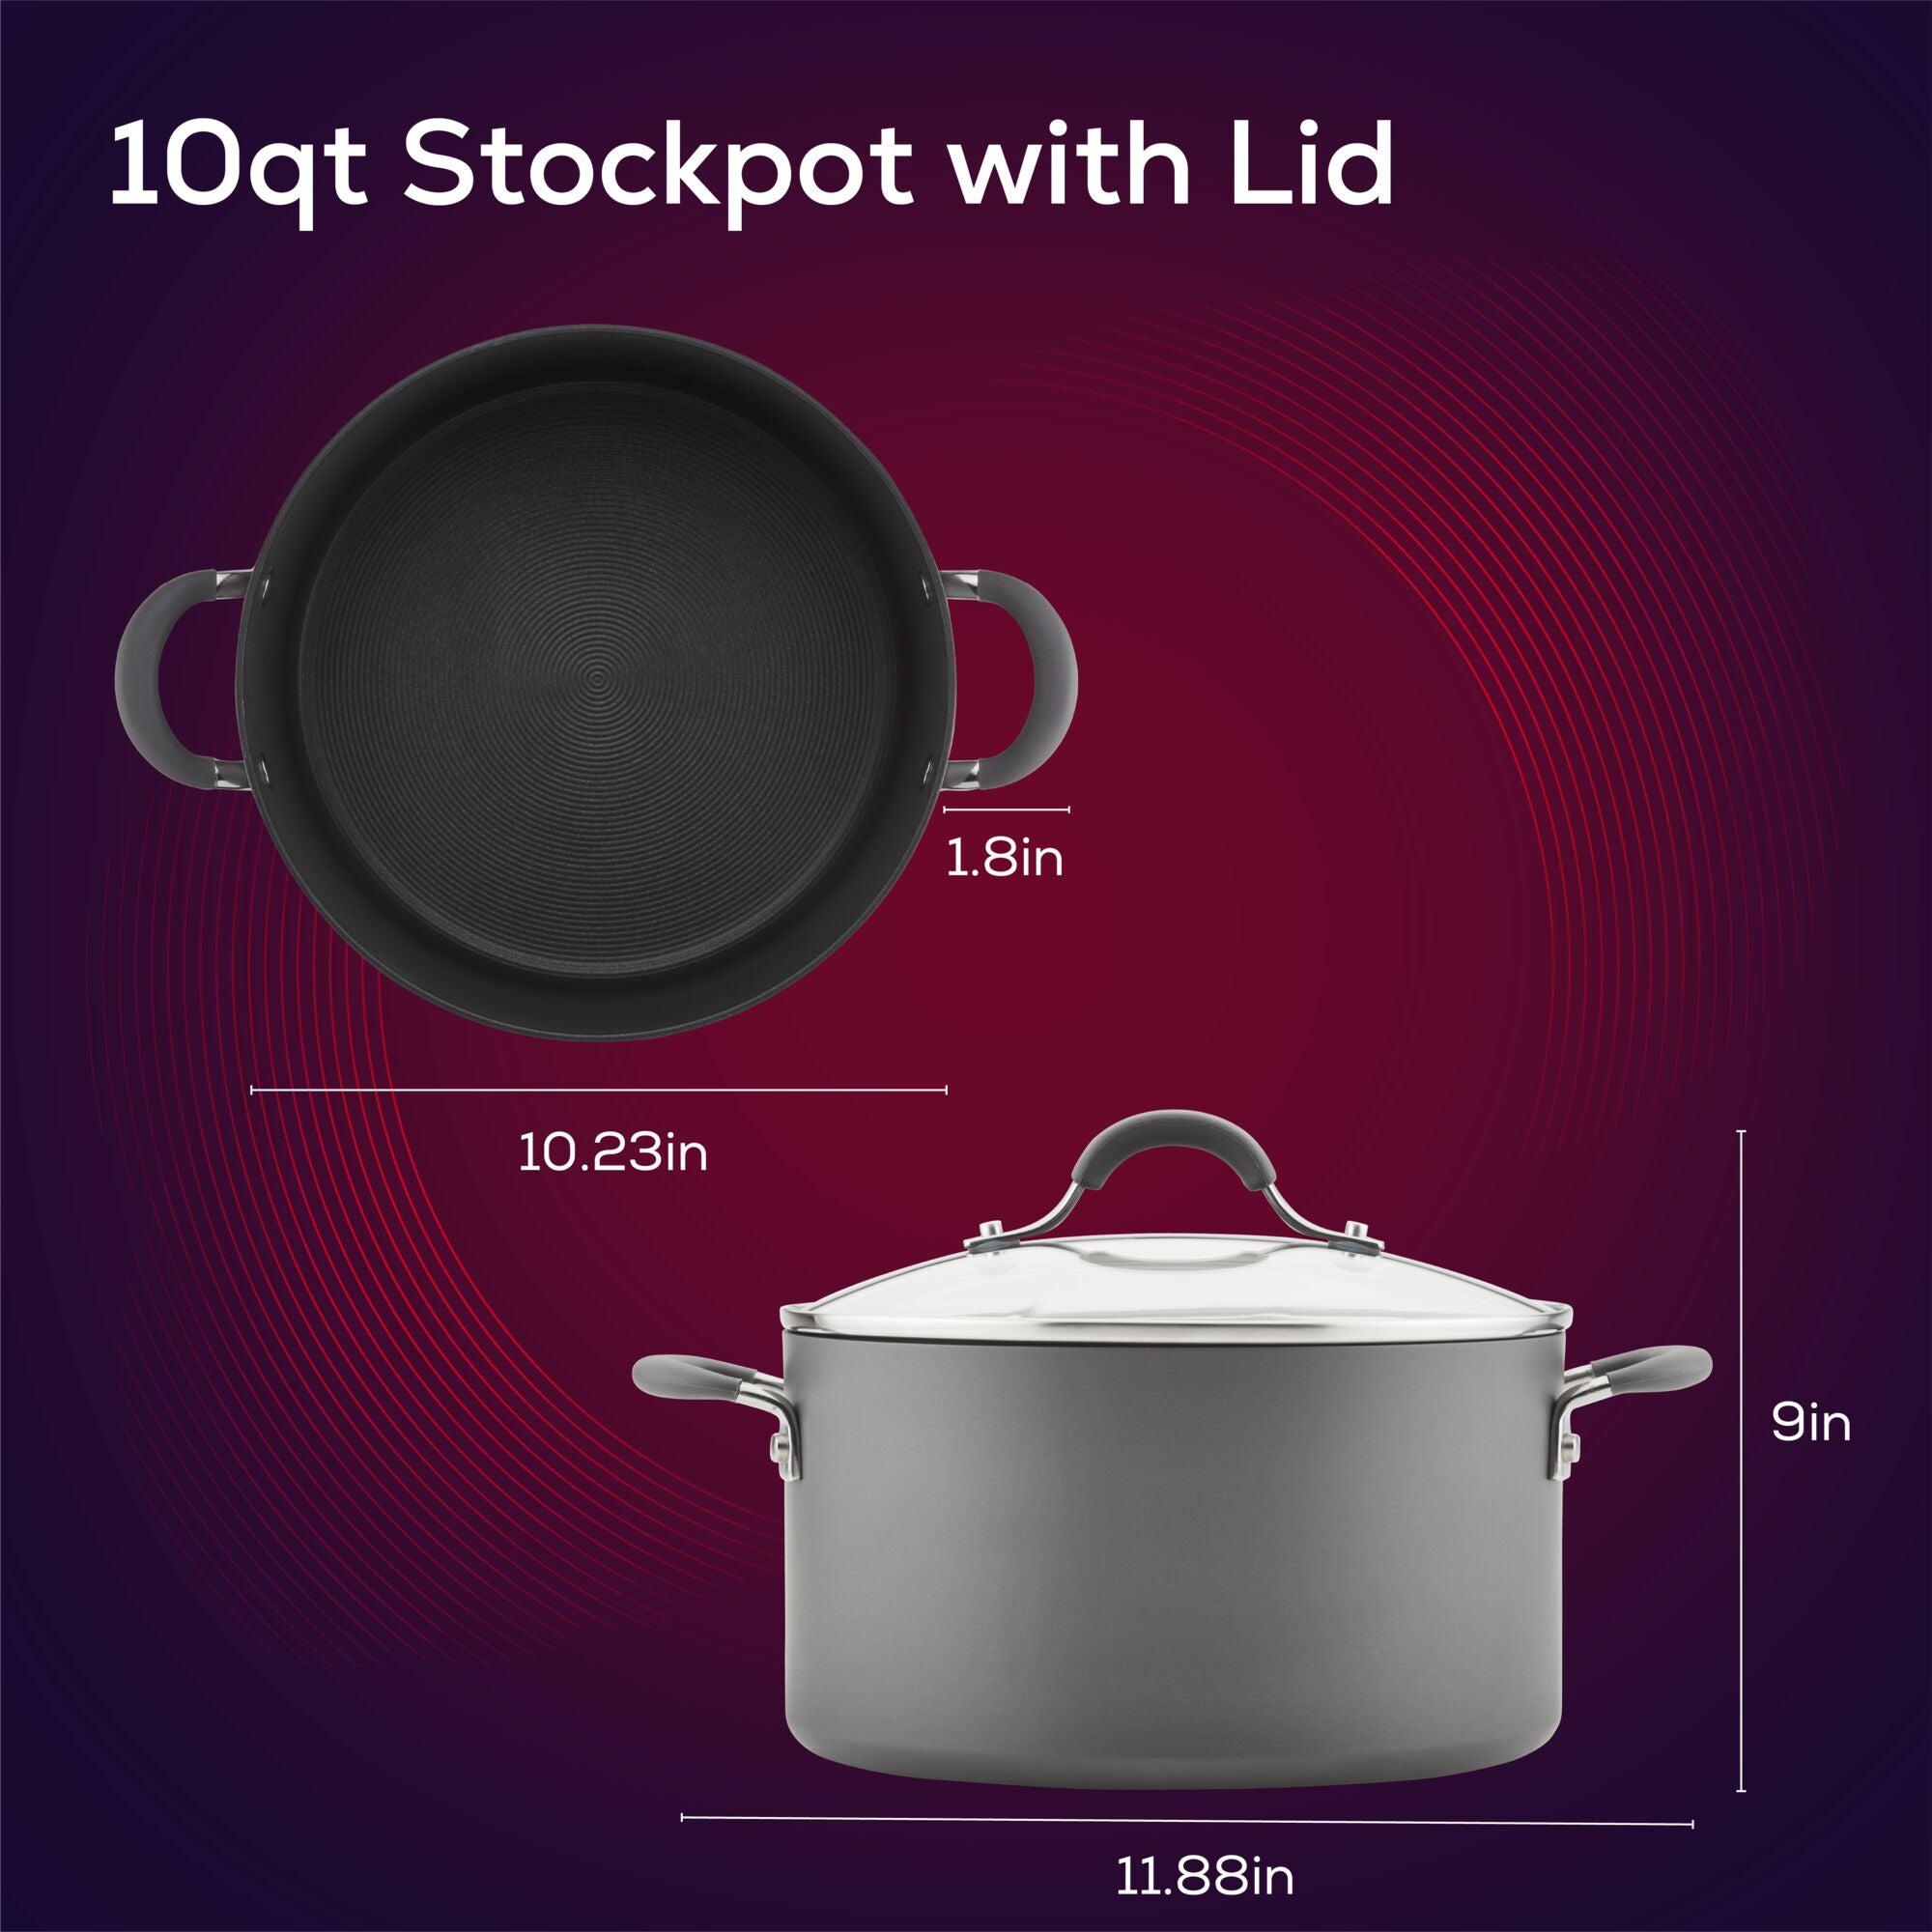 Cook N Home 10.5 qt. Hard-Anodized Aluminum Nonstick Stock Pot in